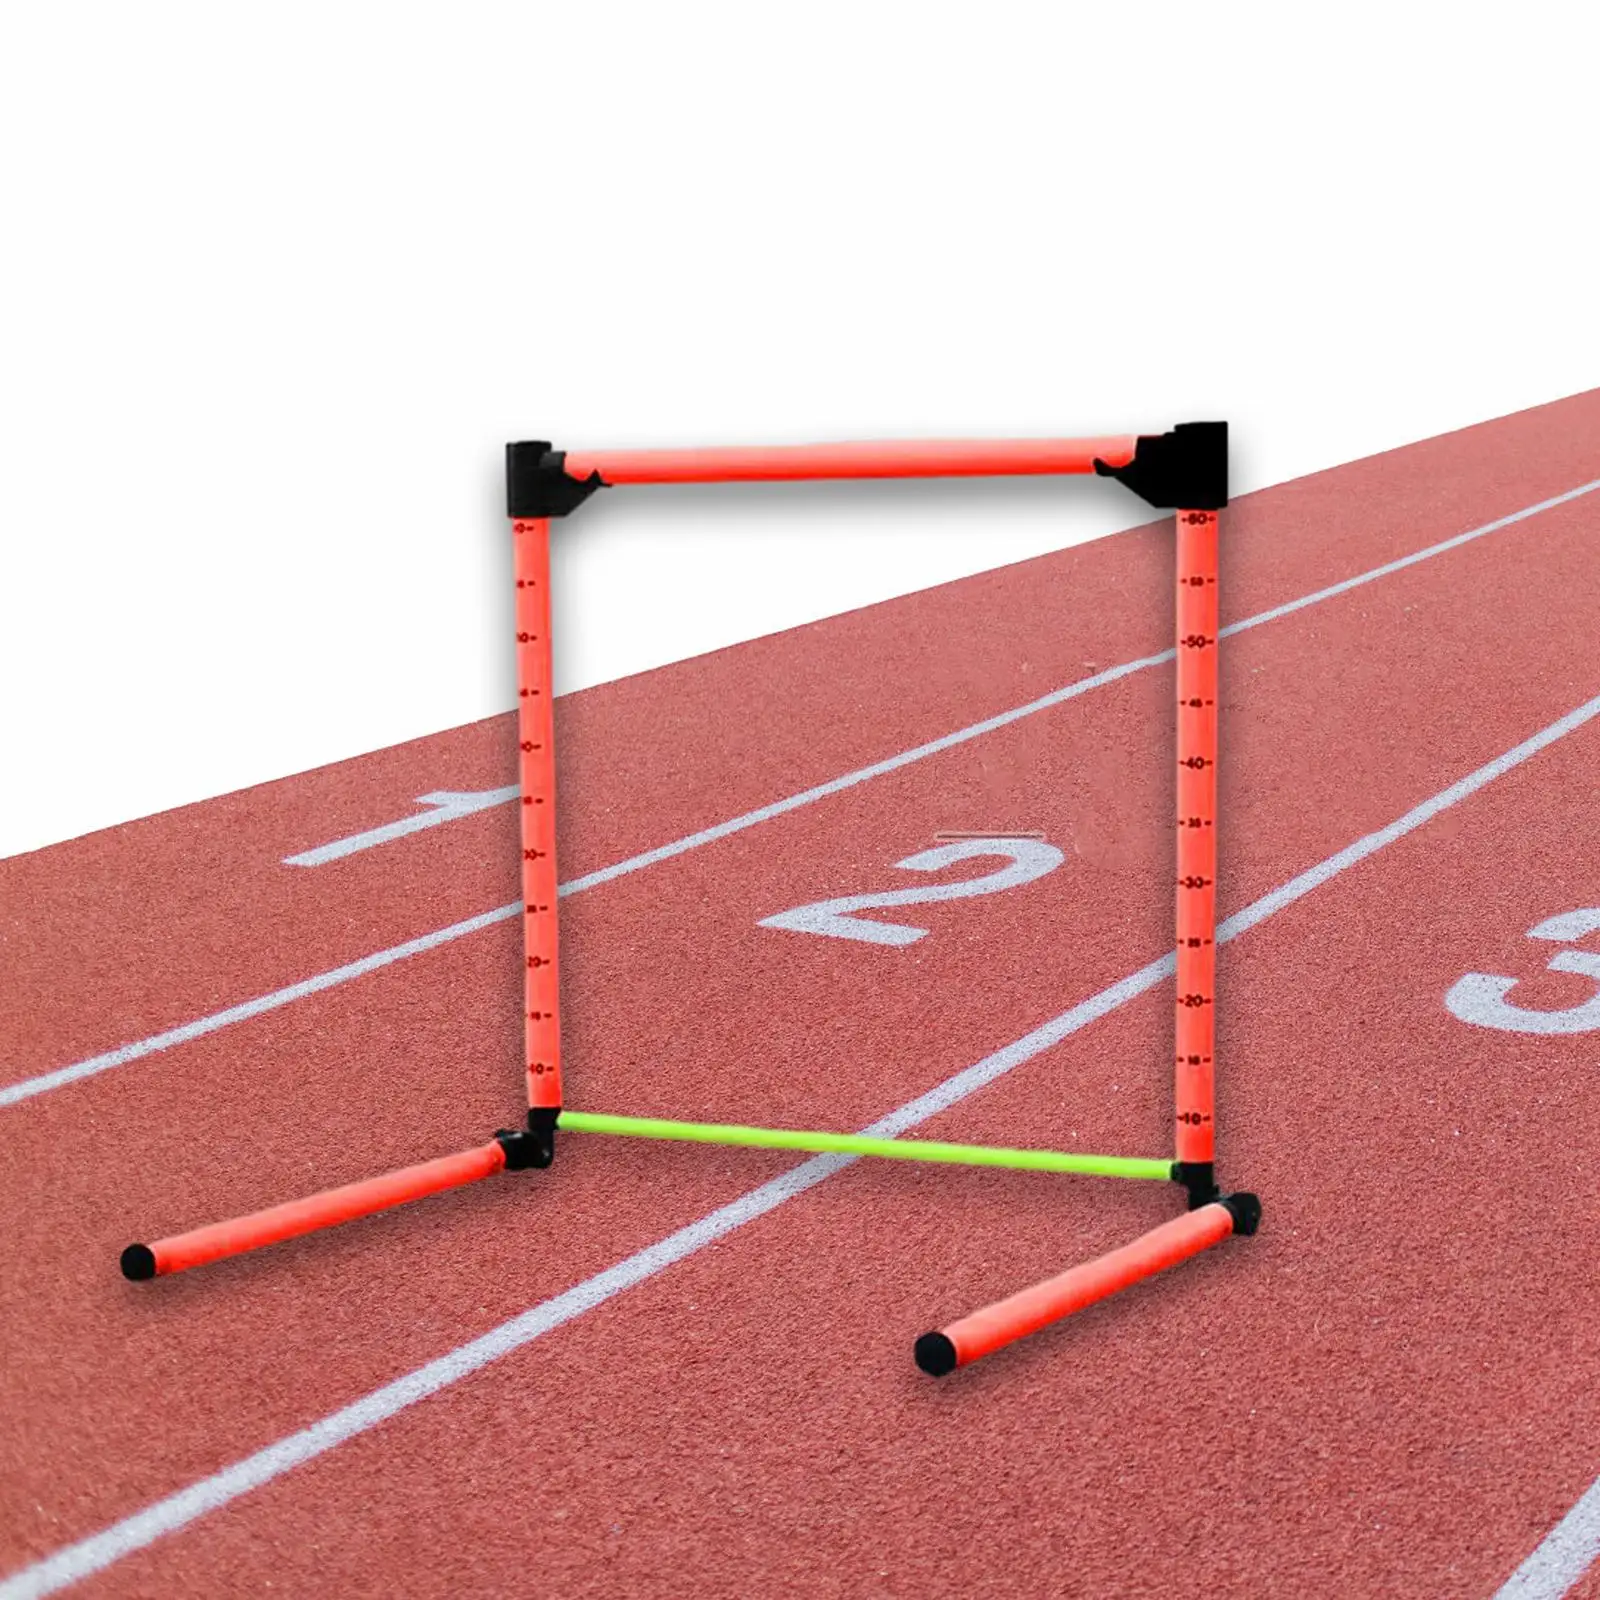 Agility Hurdles Improves Strength Jumping Bar Set Speed Hurdles Adjustable Height for Soccer Athletes Baseball Football Workout